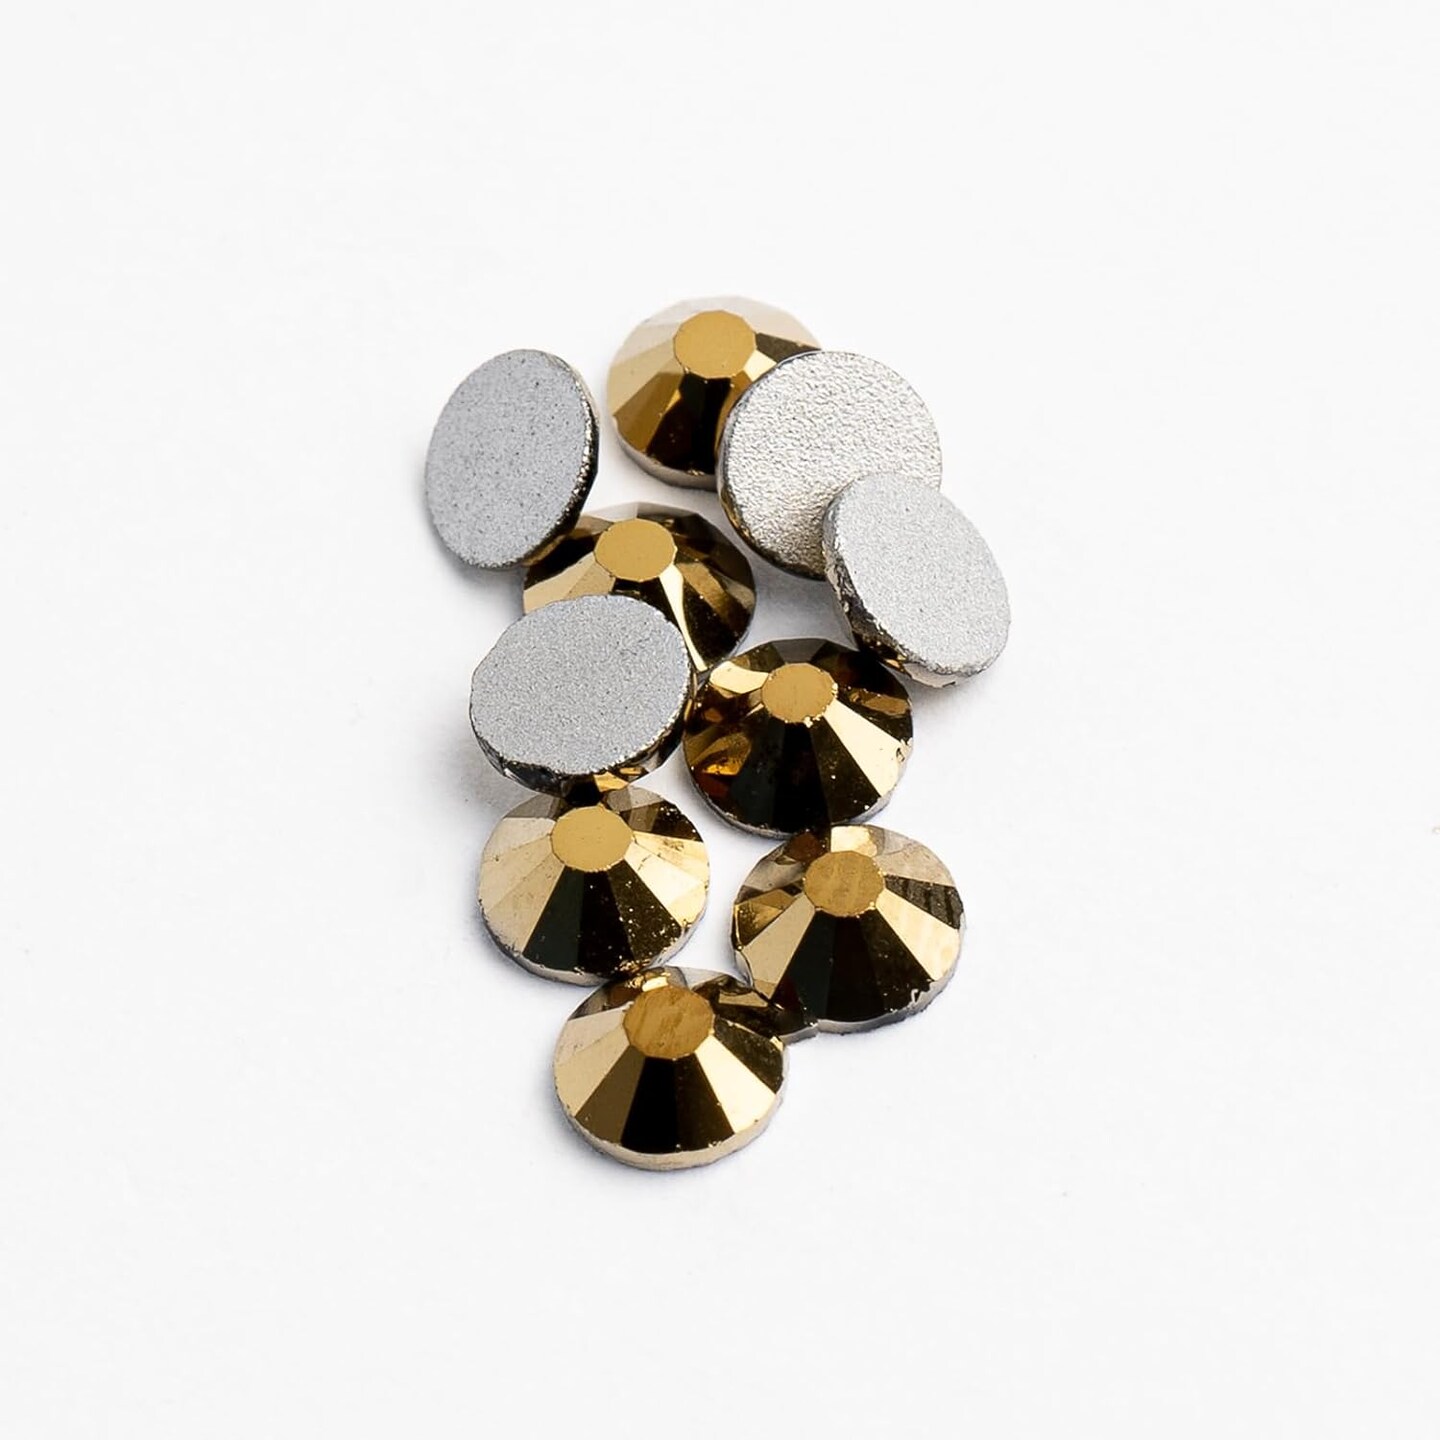 1440pcs Crystal Lane ss20 (4.7mm) Metallic Rose Gold Rhinestones Flat  Backs, Round Glass Gemstone Embellishments